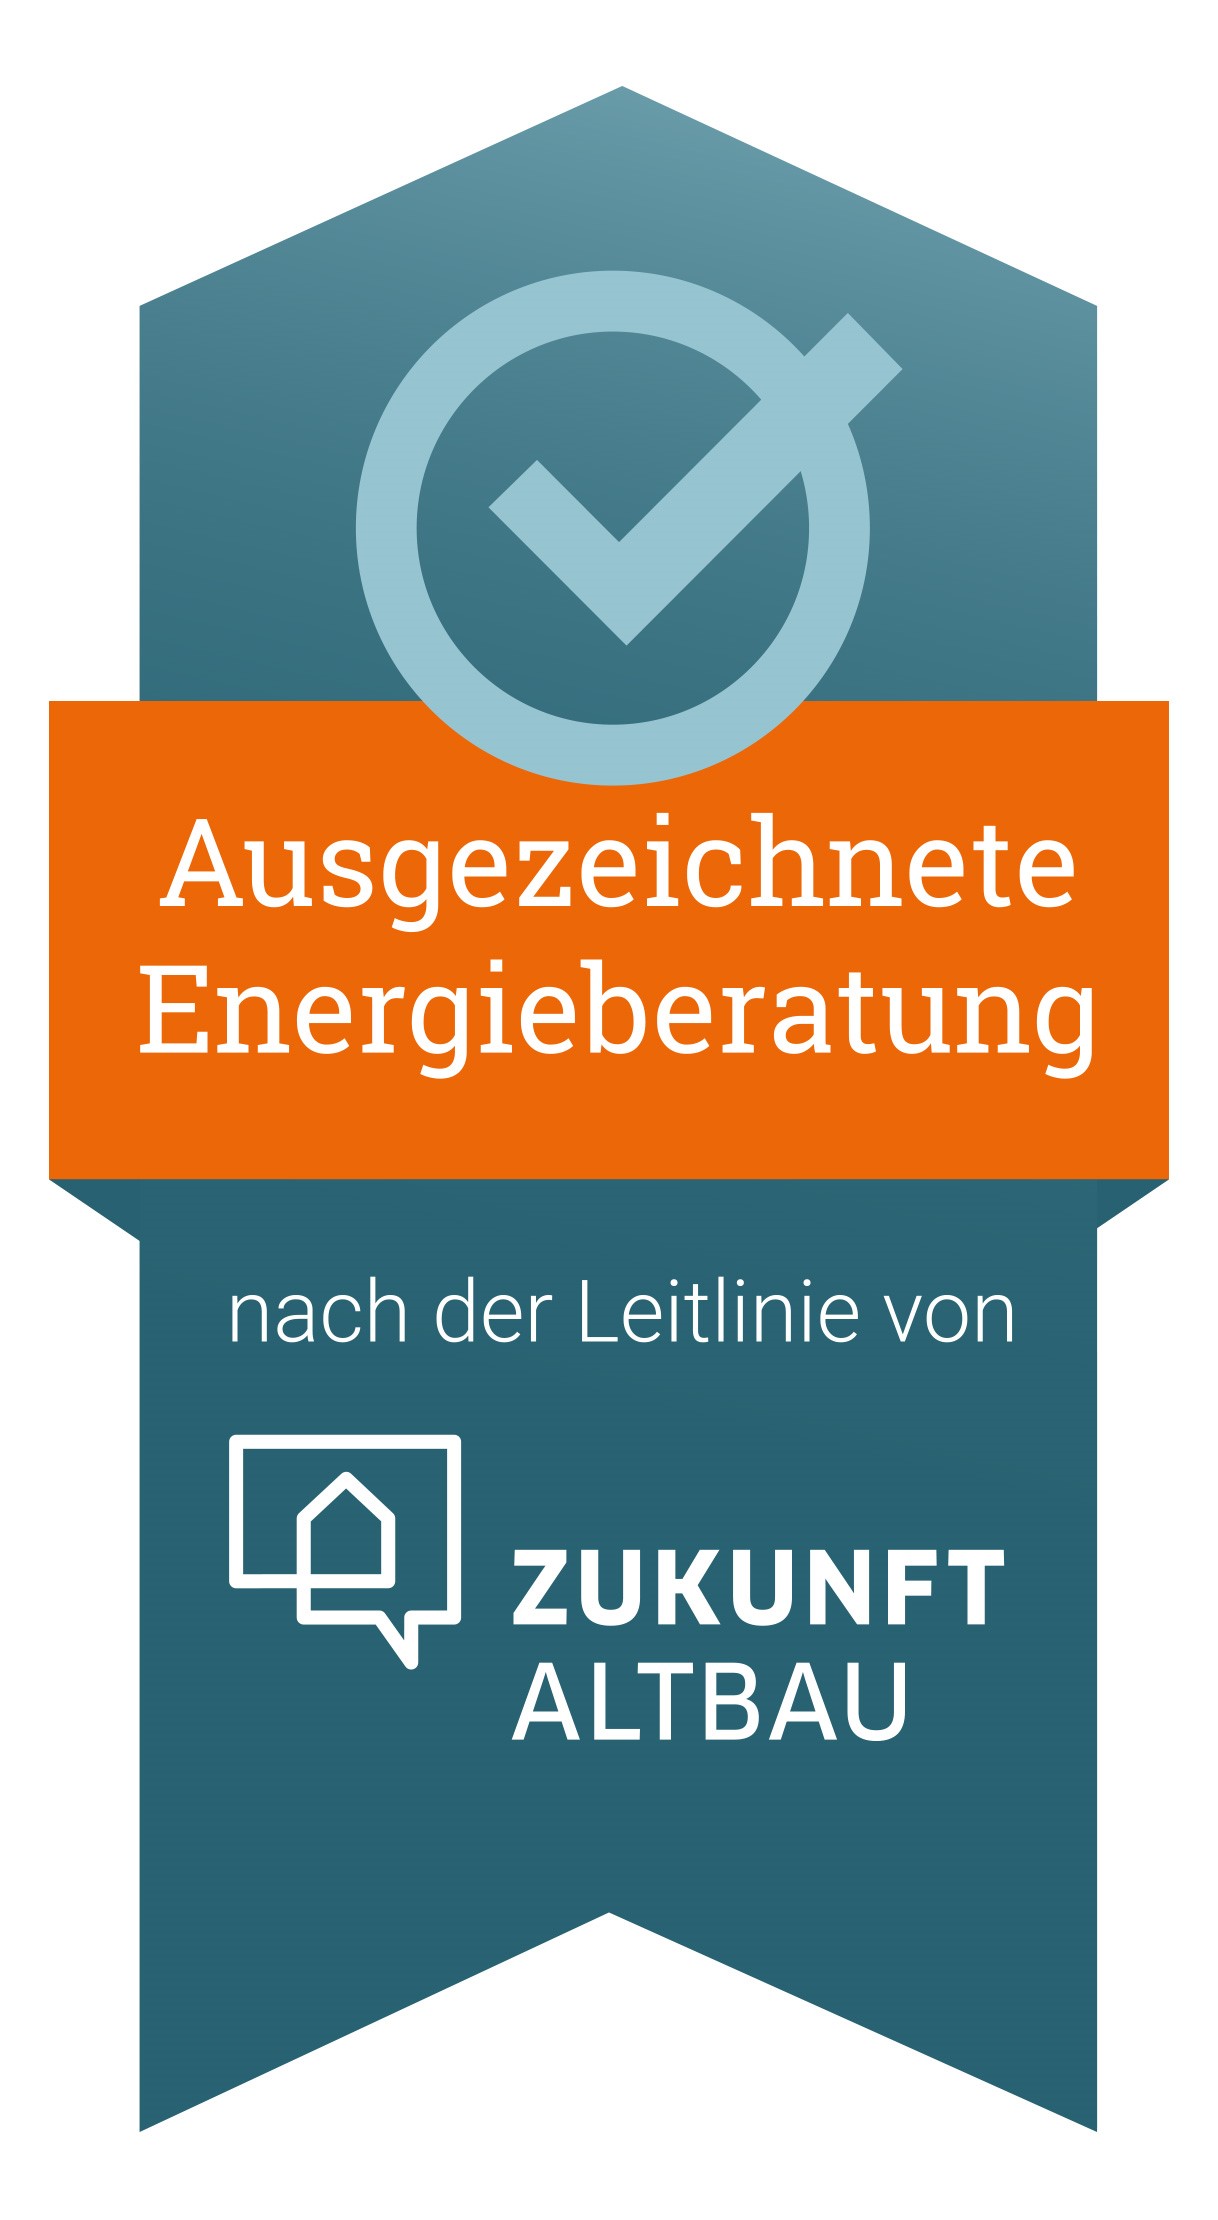 Energie & Haus 24 ® München